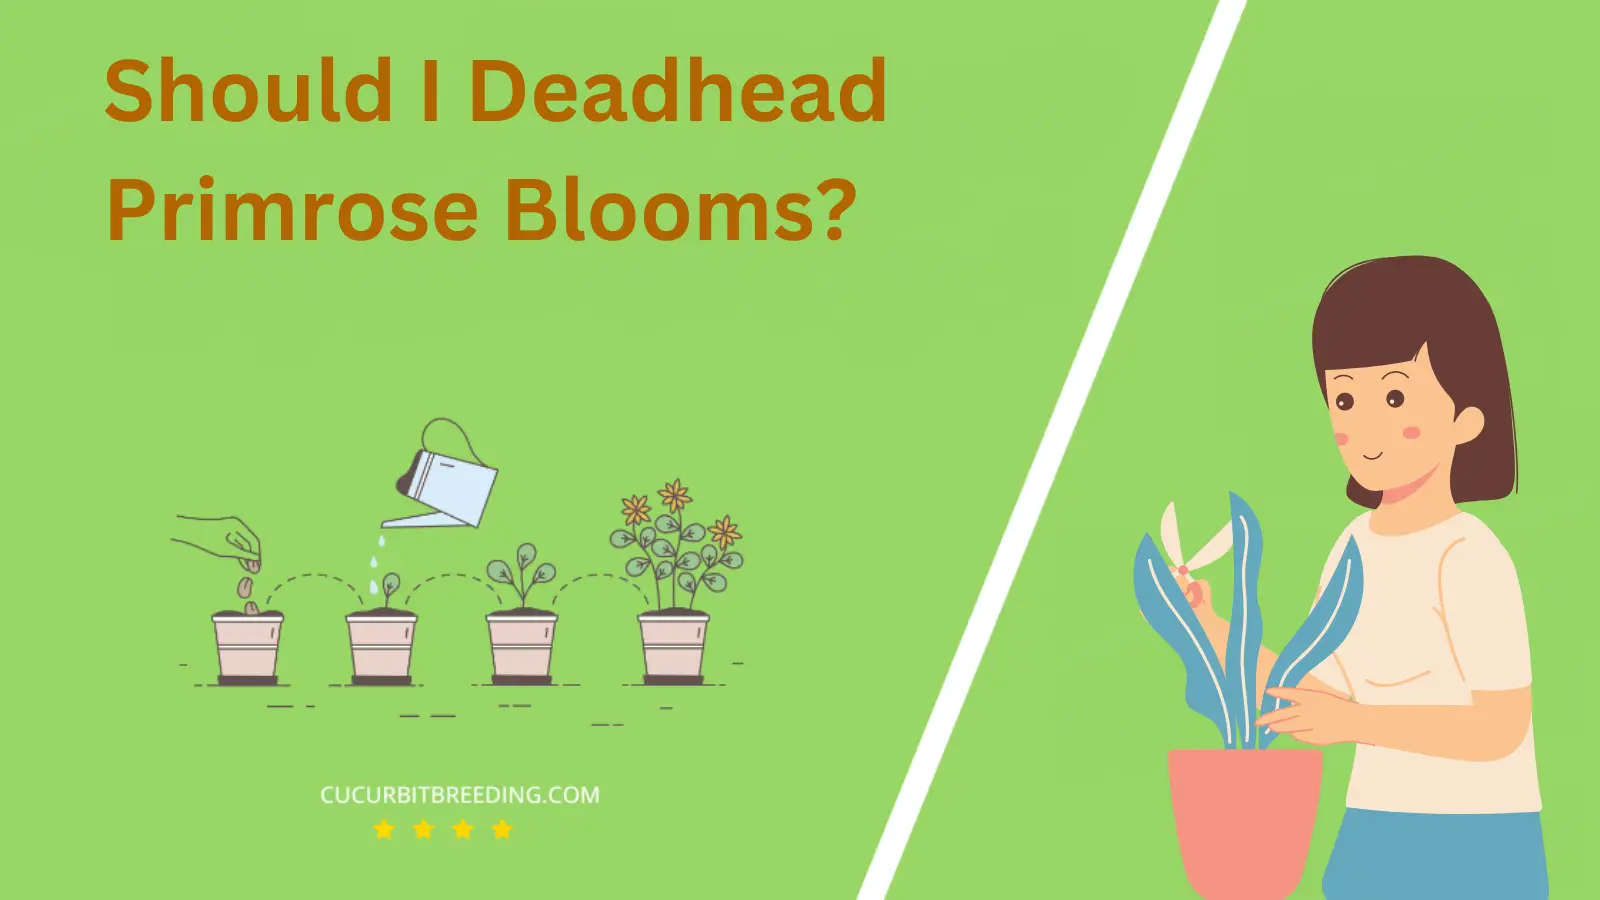 Should I Deadhead Primrose Blooms?